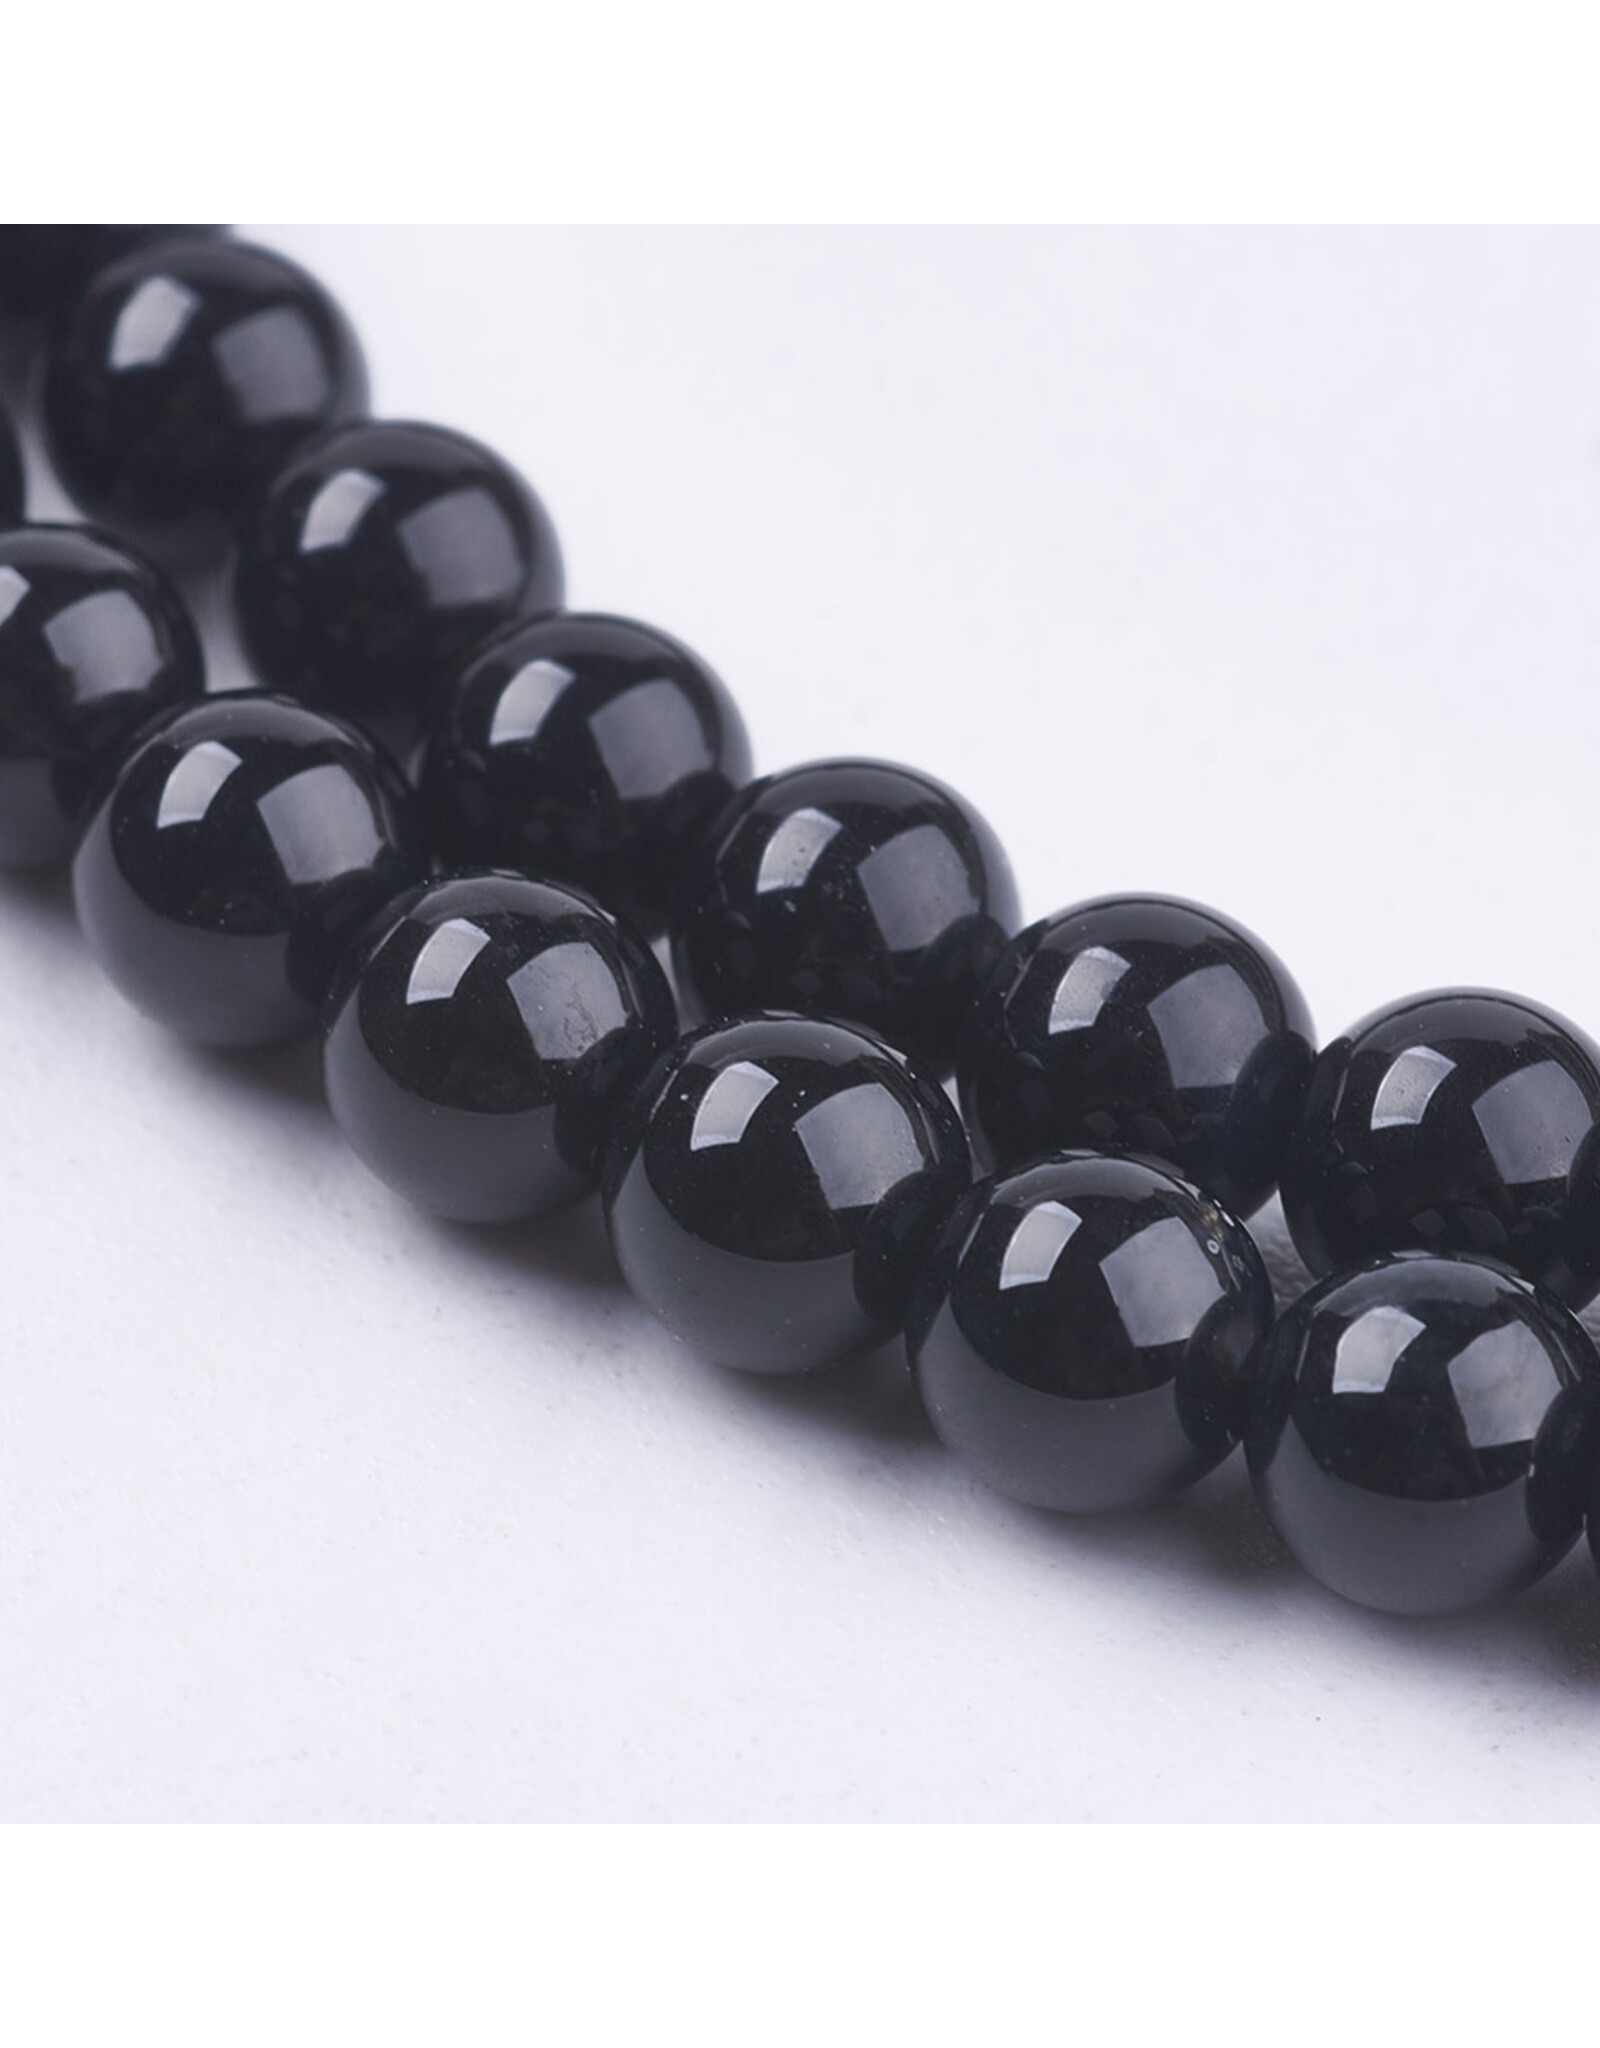 Onyx  6mm  Black  15” Strand  approx  x60 Beads